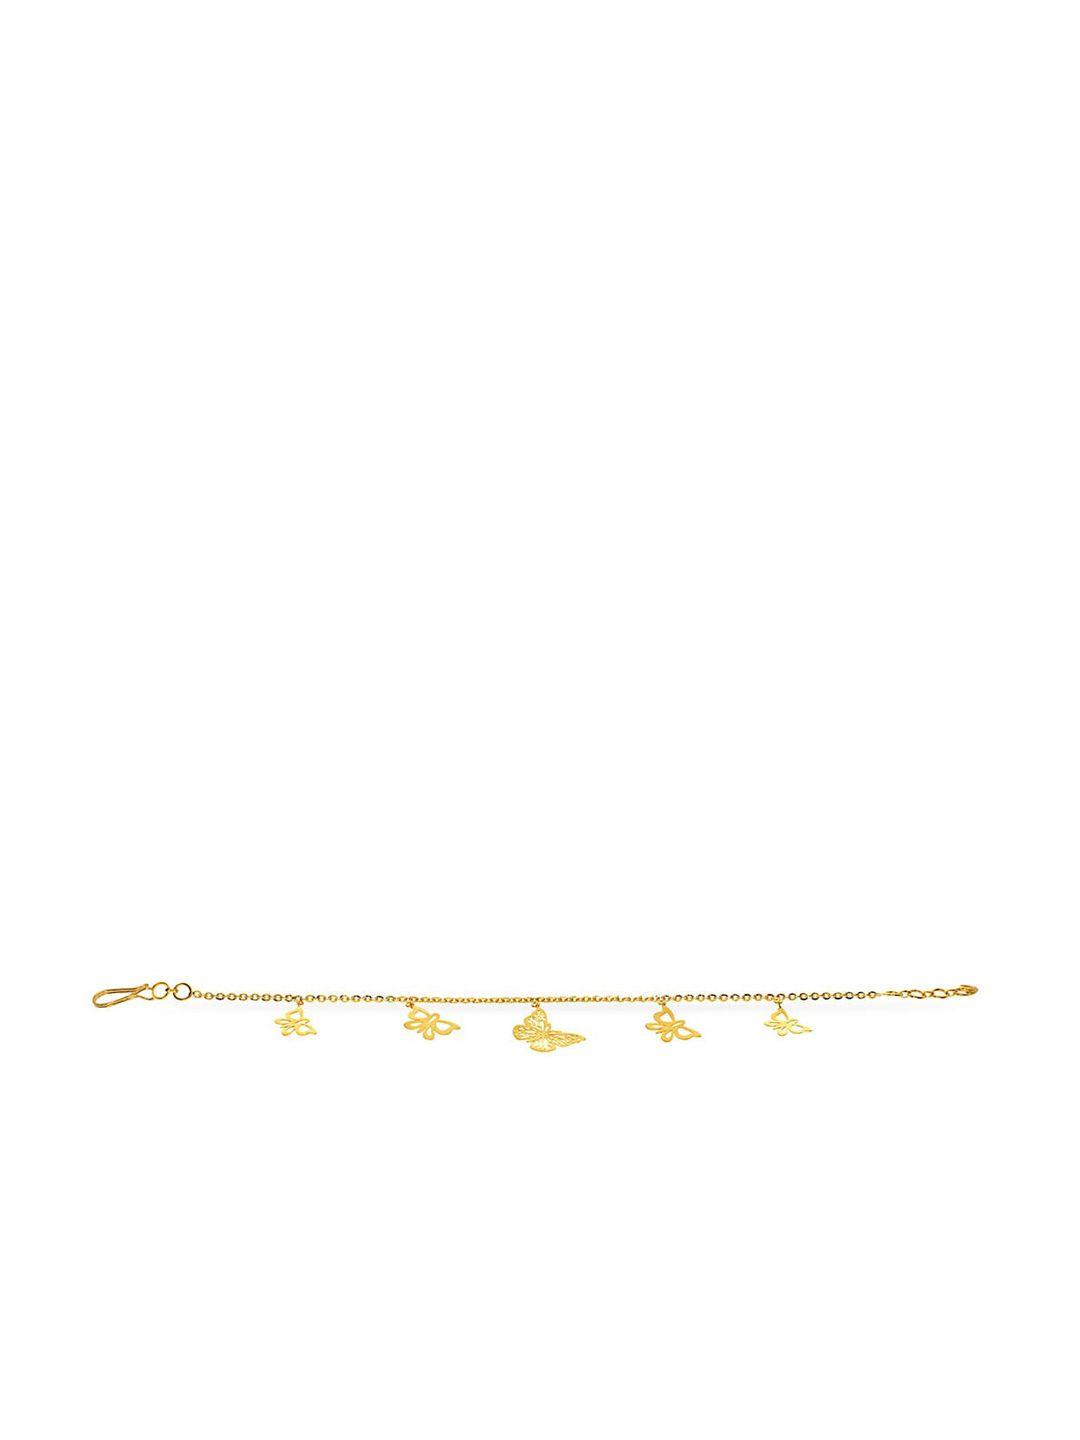 senco 22kt dancing butterflies gold bracelet-3.5gm